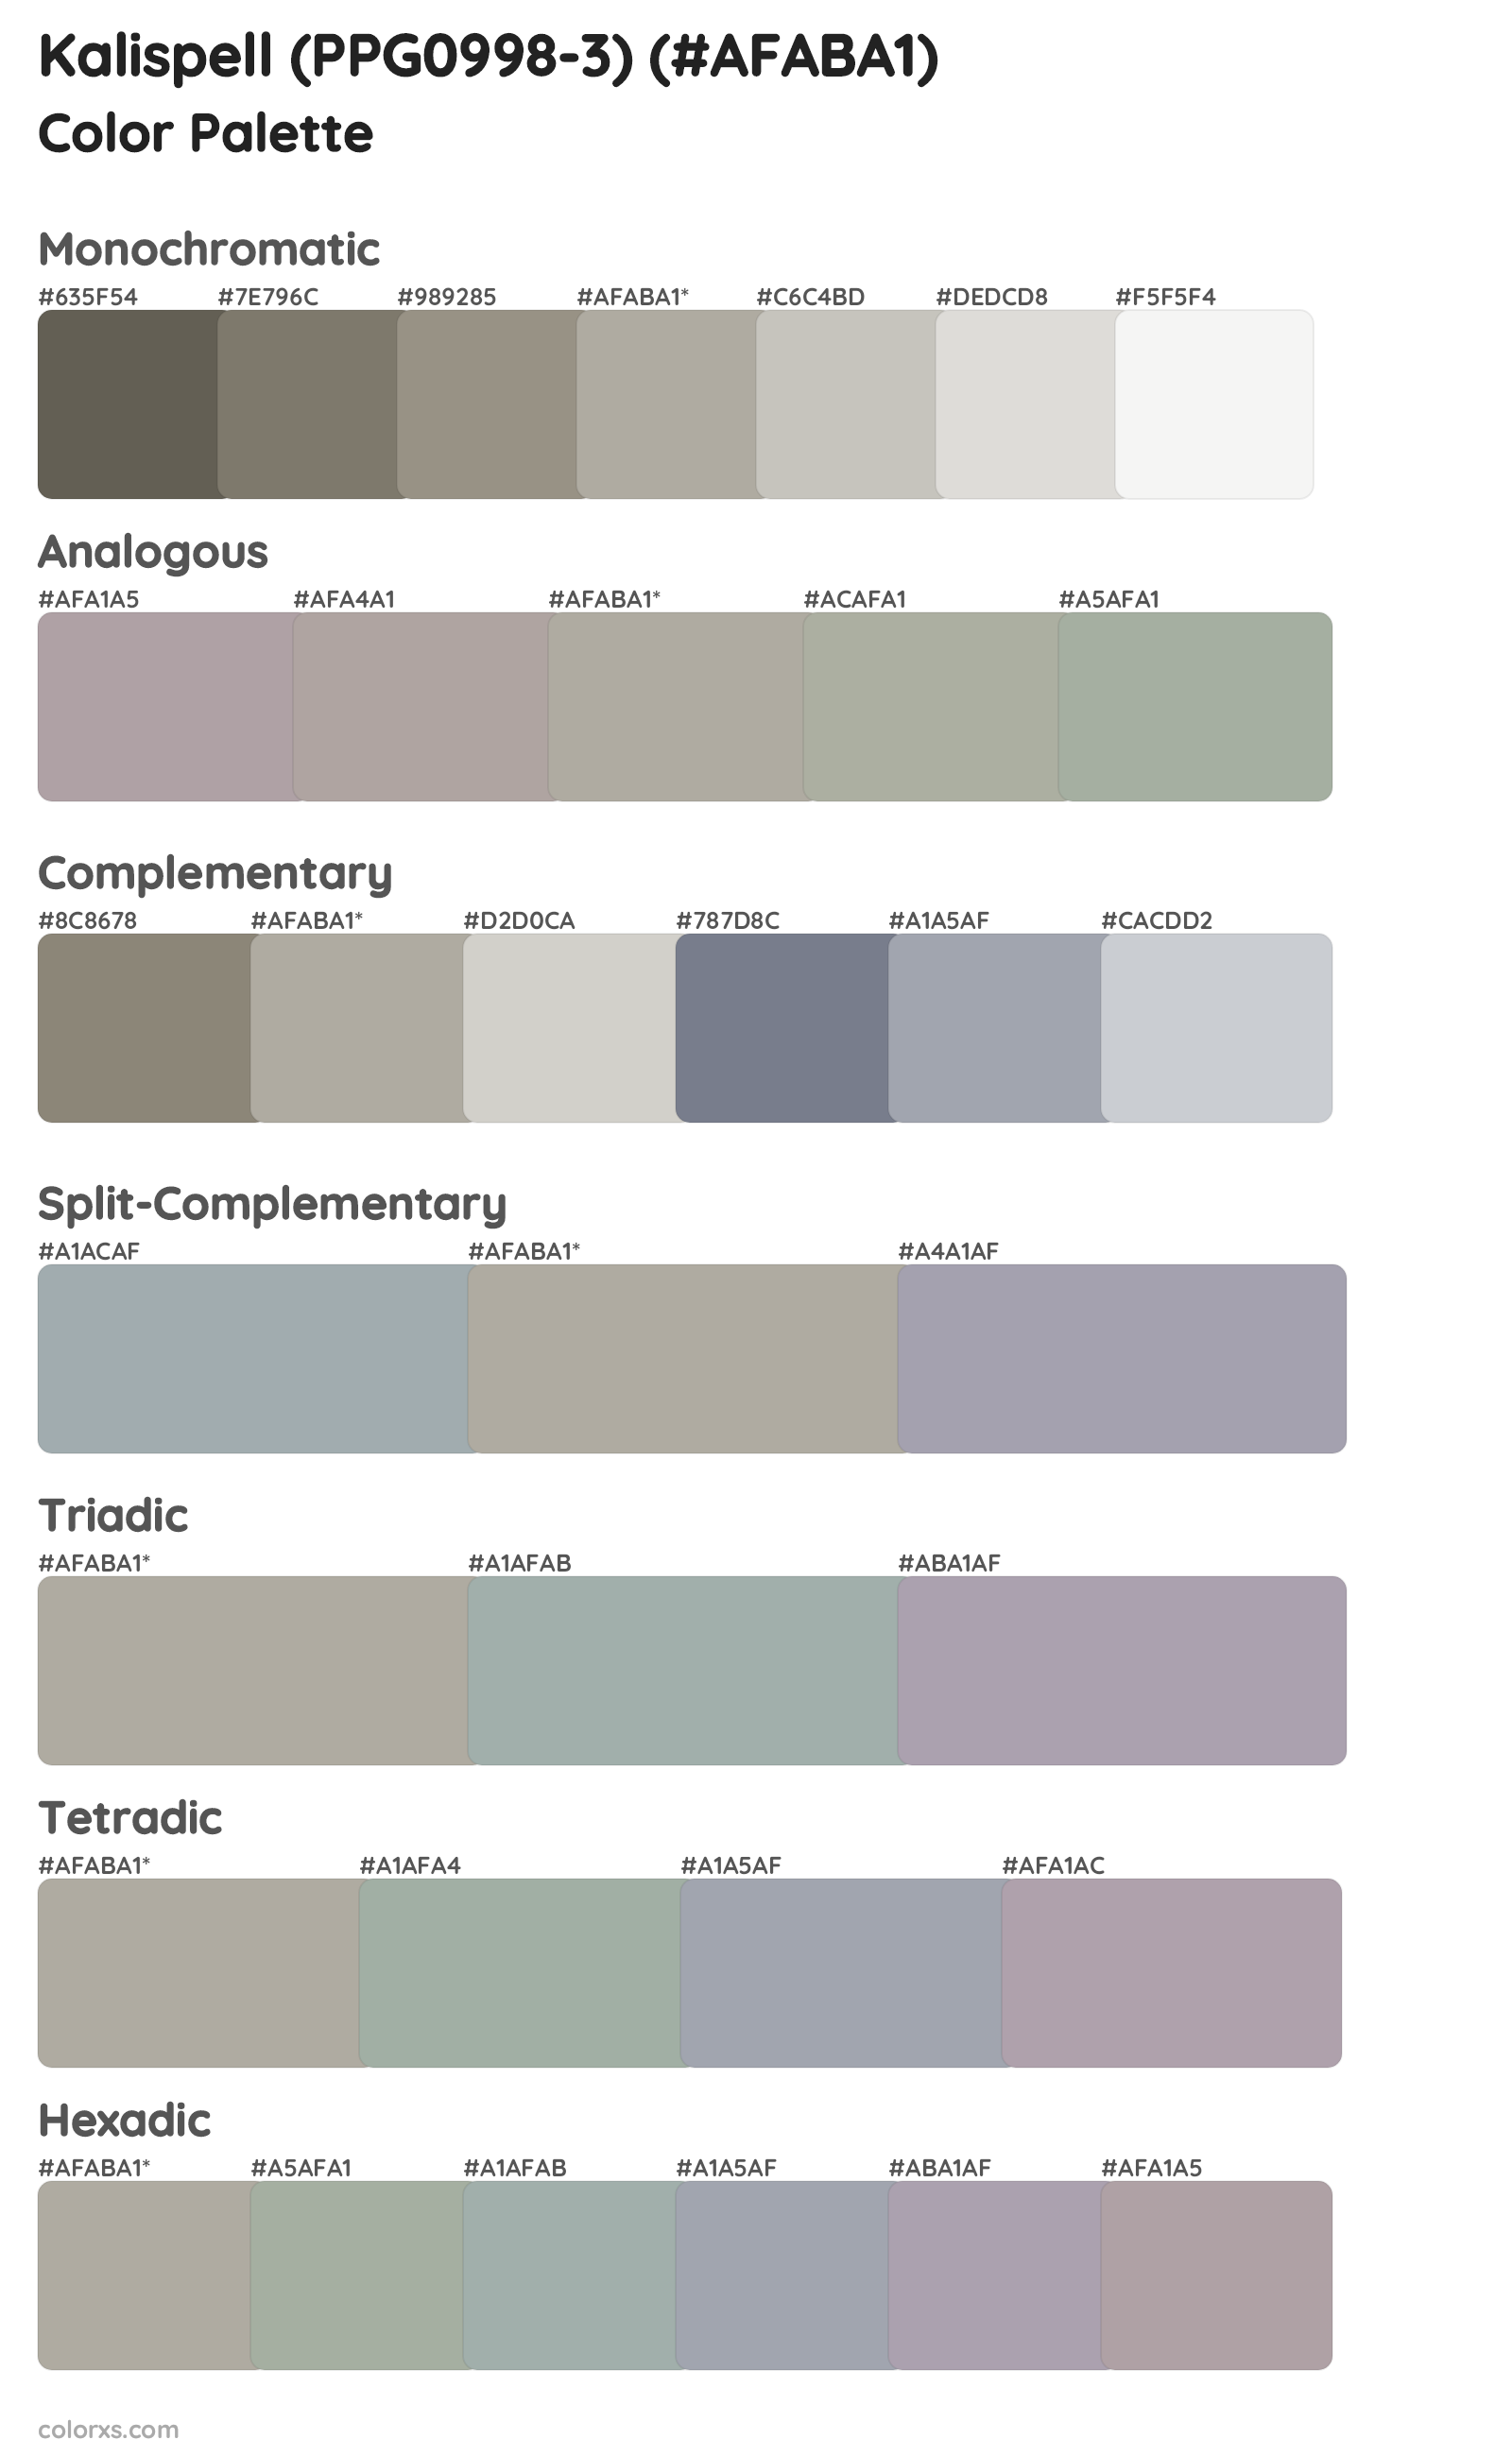 Kalispell (PPG0998-3) Color Scheme Palettes